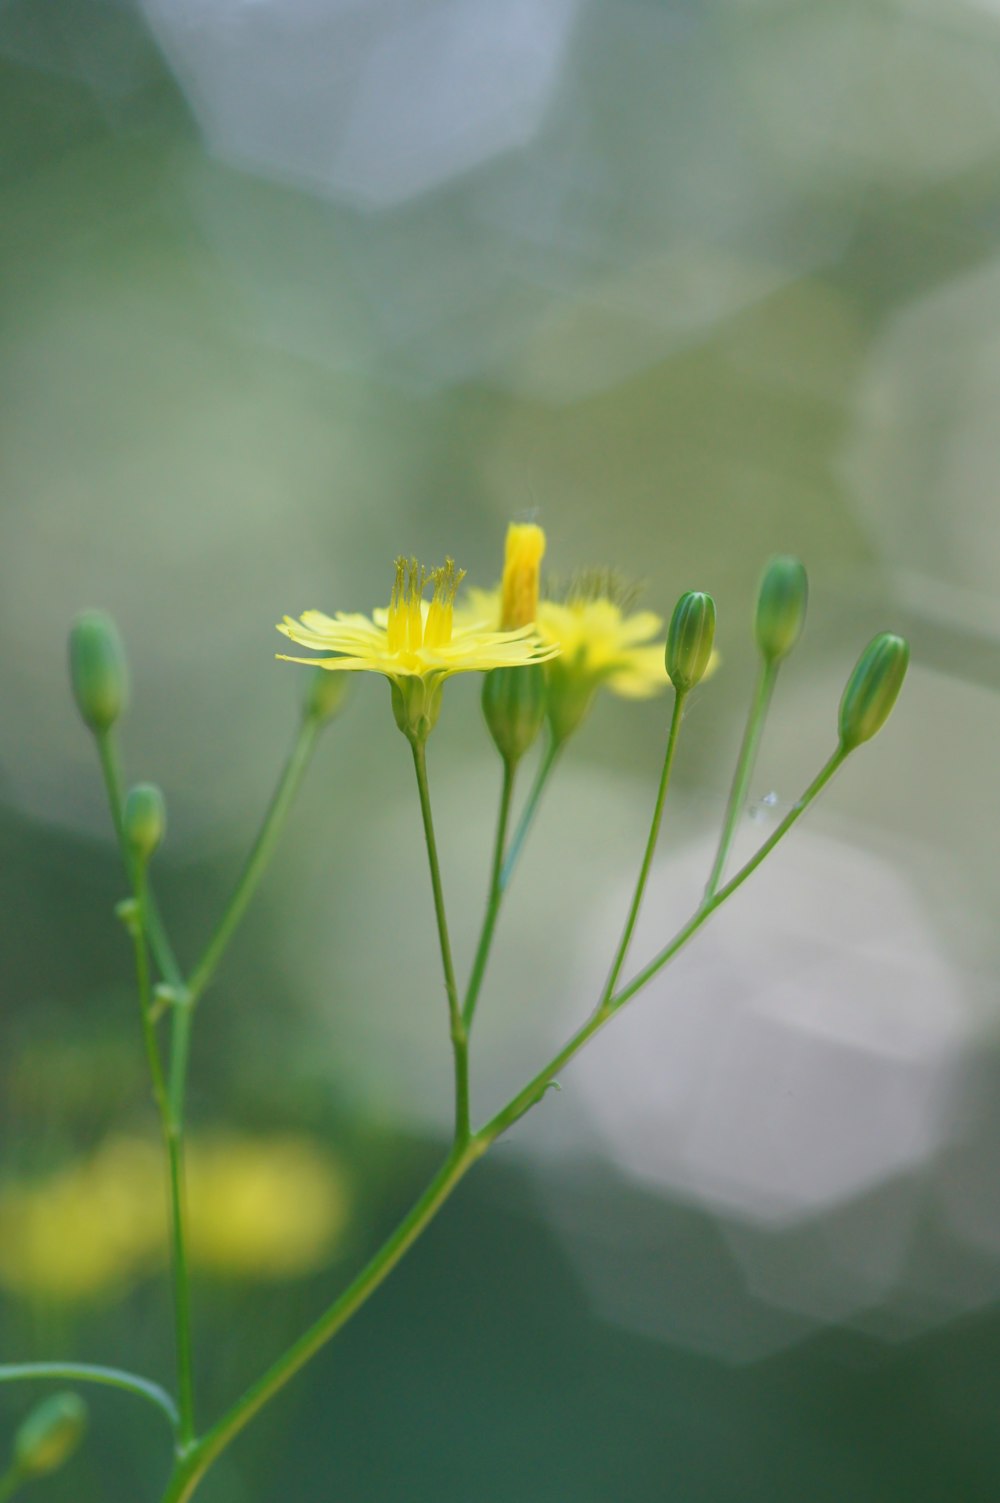 bokeh photography of yellow-petaled flower